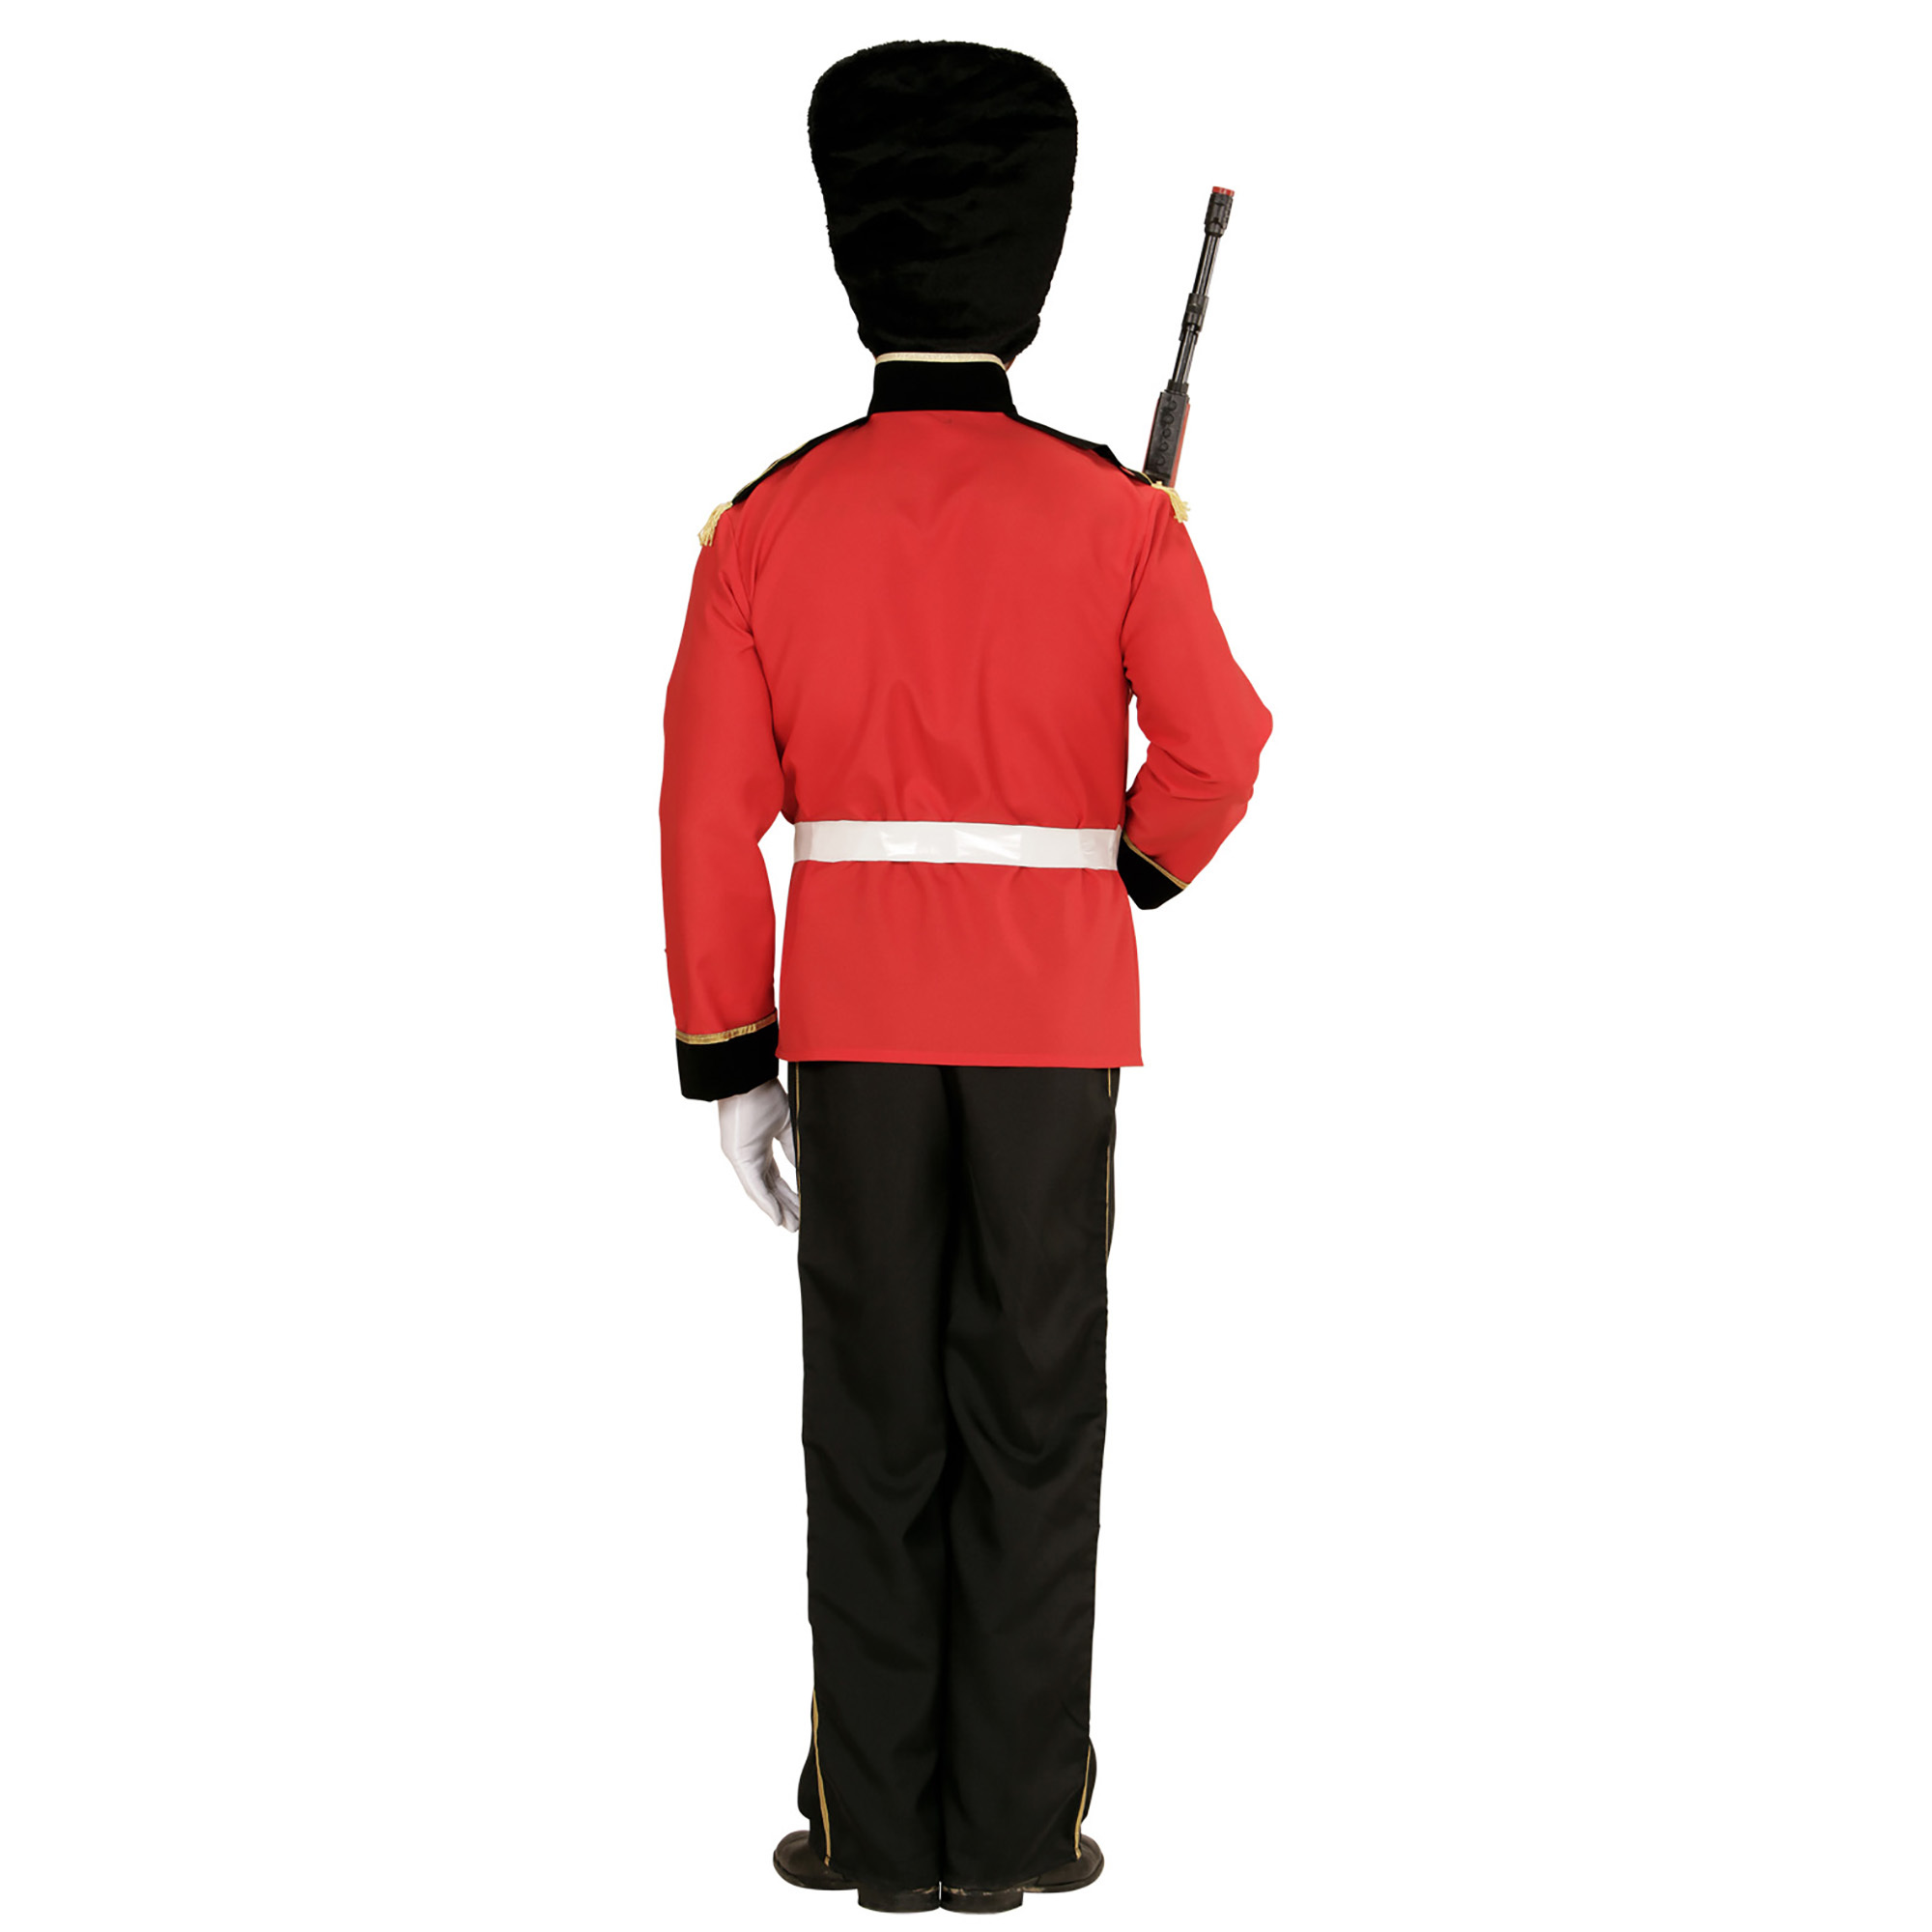 in tegenstelling tot Blind vertrouwen Memoriseren Engels Royal guard kostuum heren Goedkoop